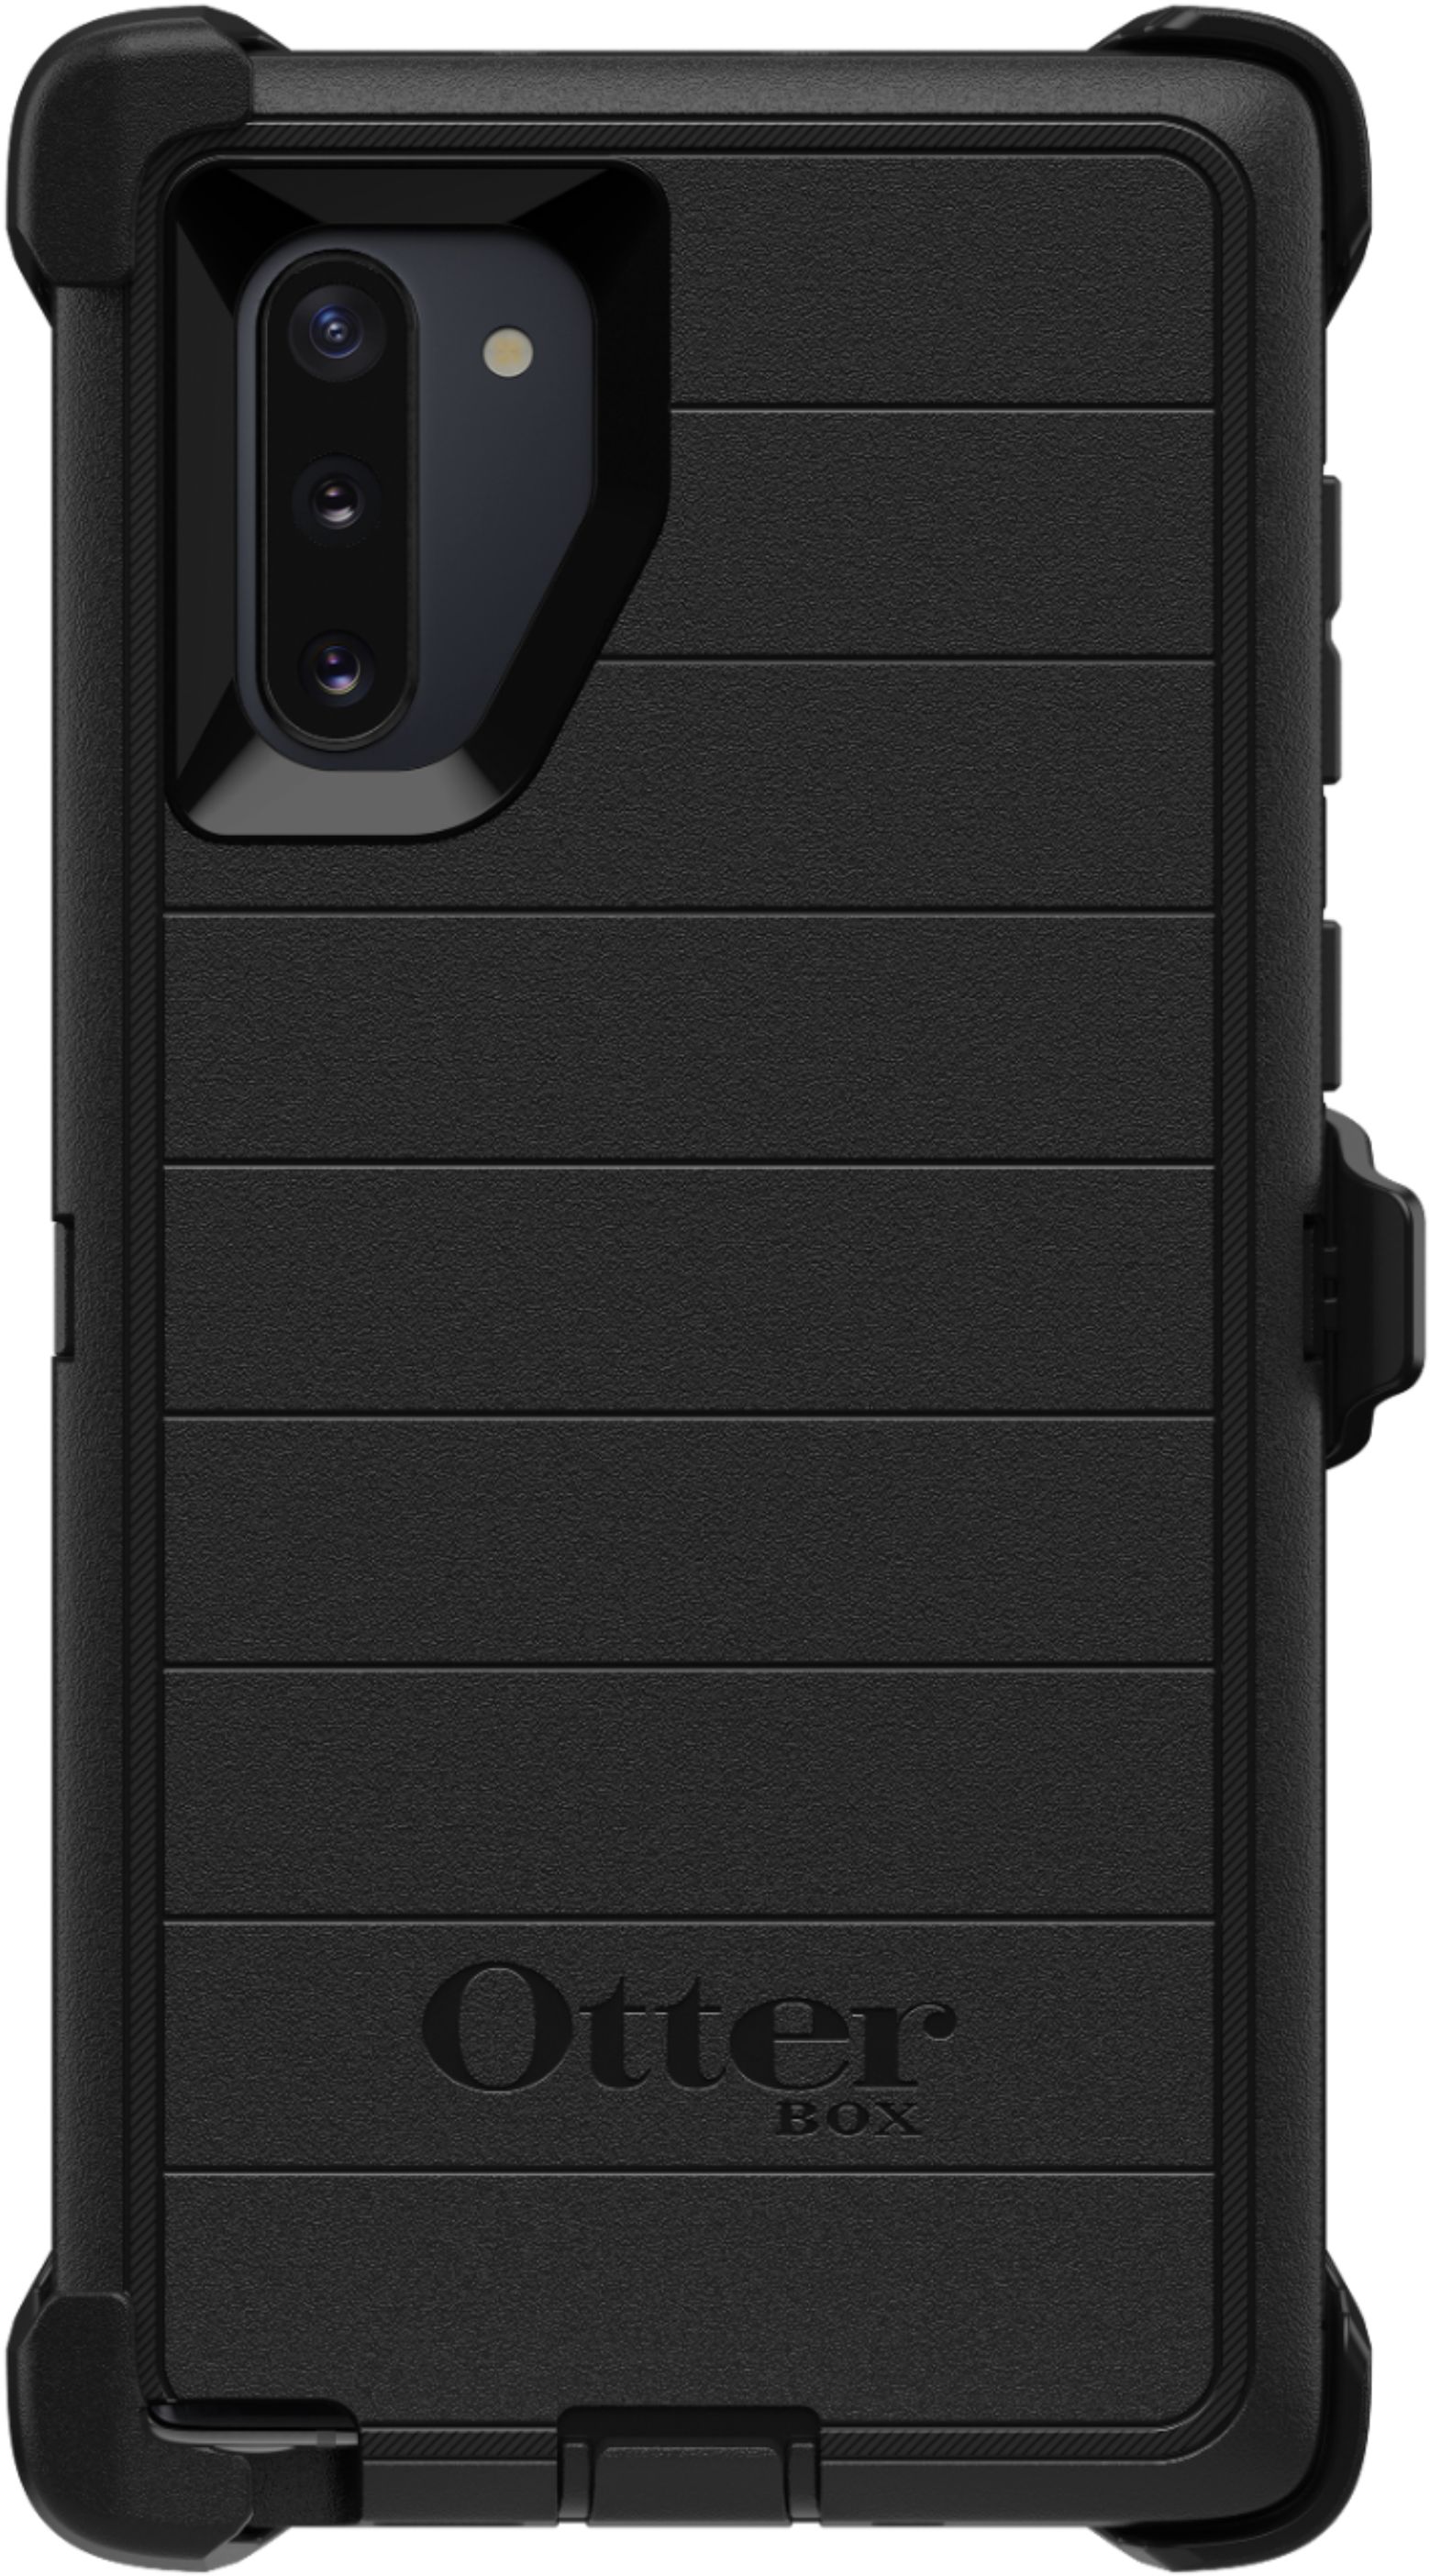 Continent Vrijstelling Wiskundige OtterBox Defender Series Pro Case for Samsung Galaxy Note10 Black 77-63637  - Best Buy